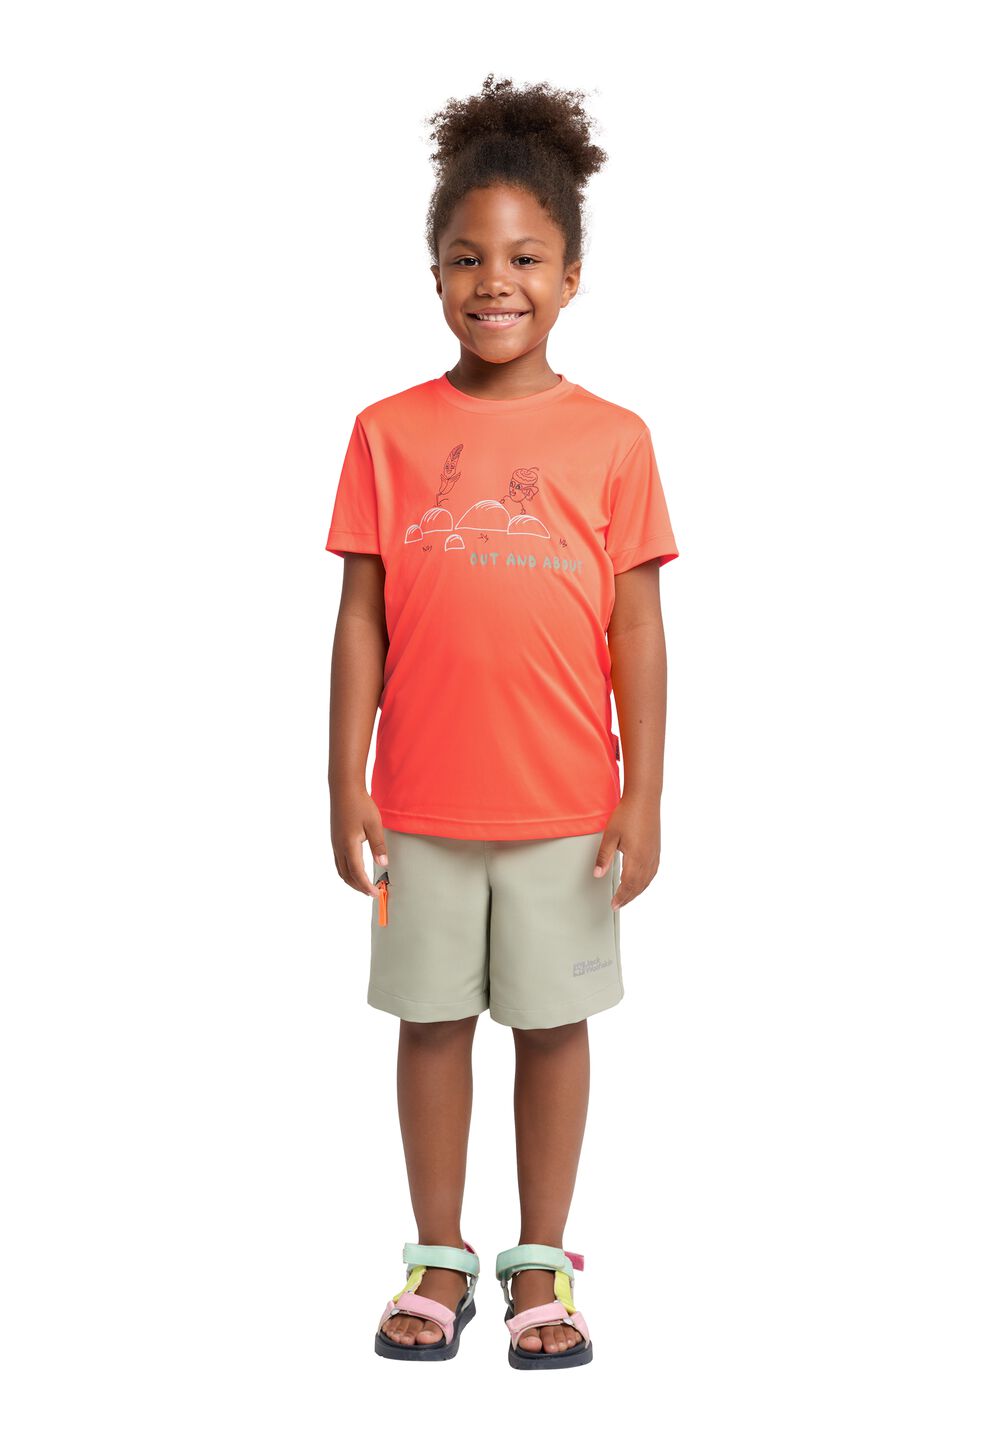 Jack Wolfskin OUT AND About T-Shirt Kids Functioneel shirt Kinderen 92 rood digital orange